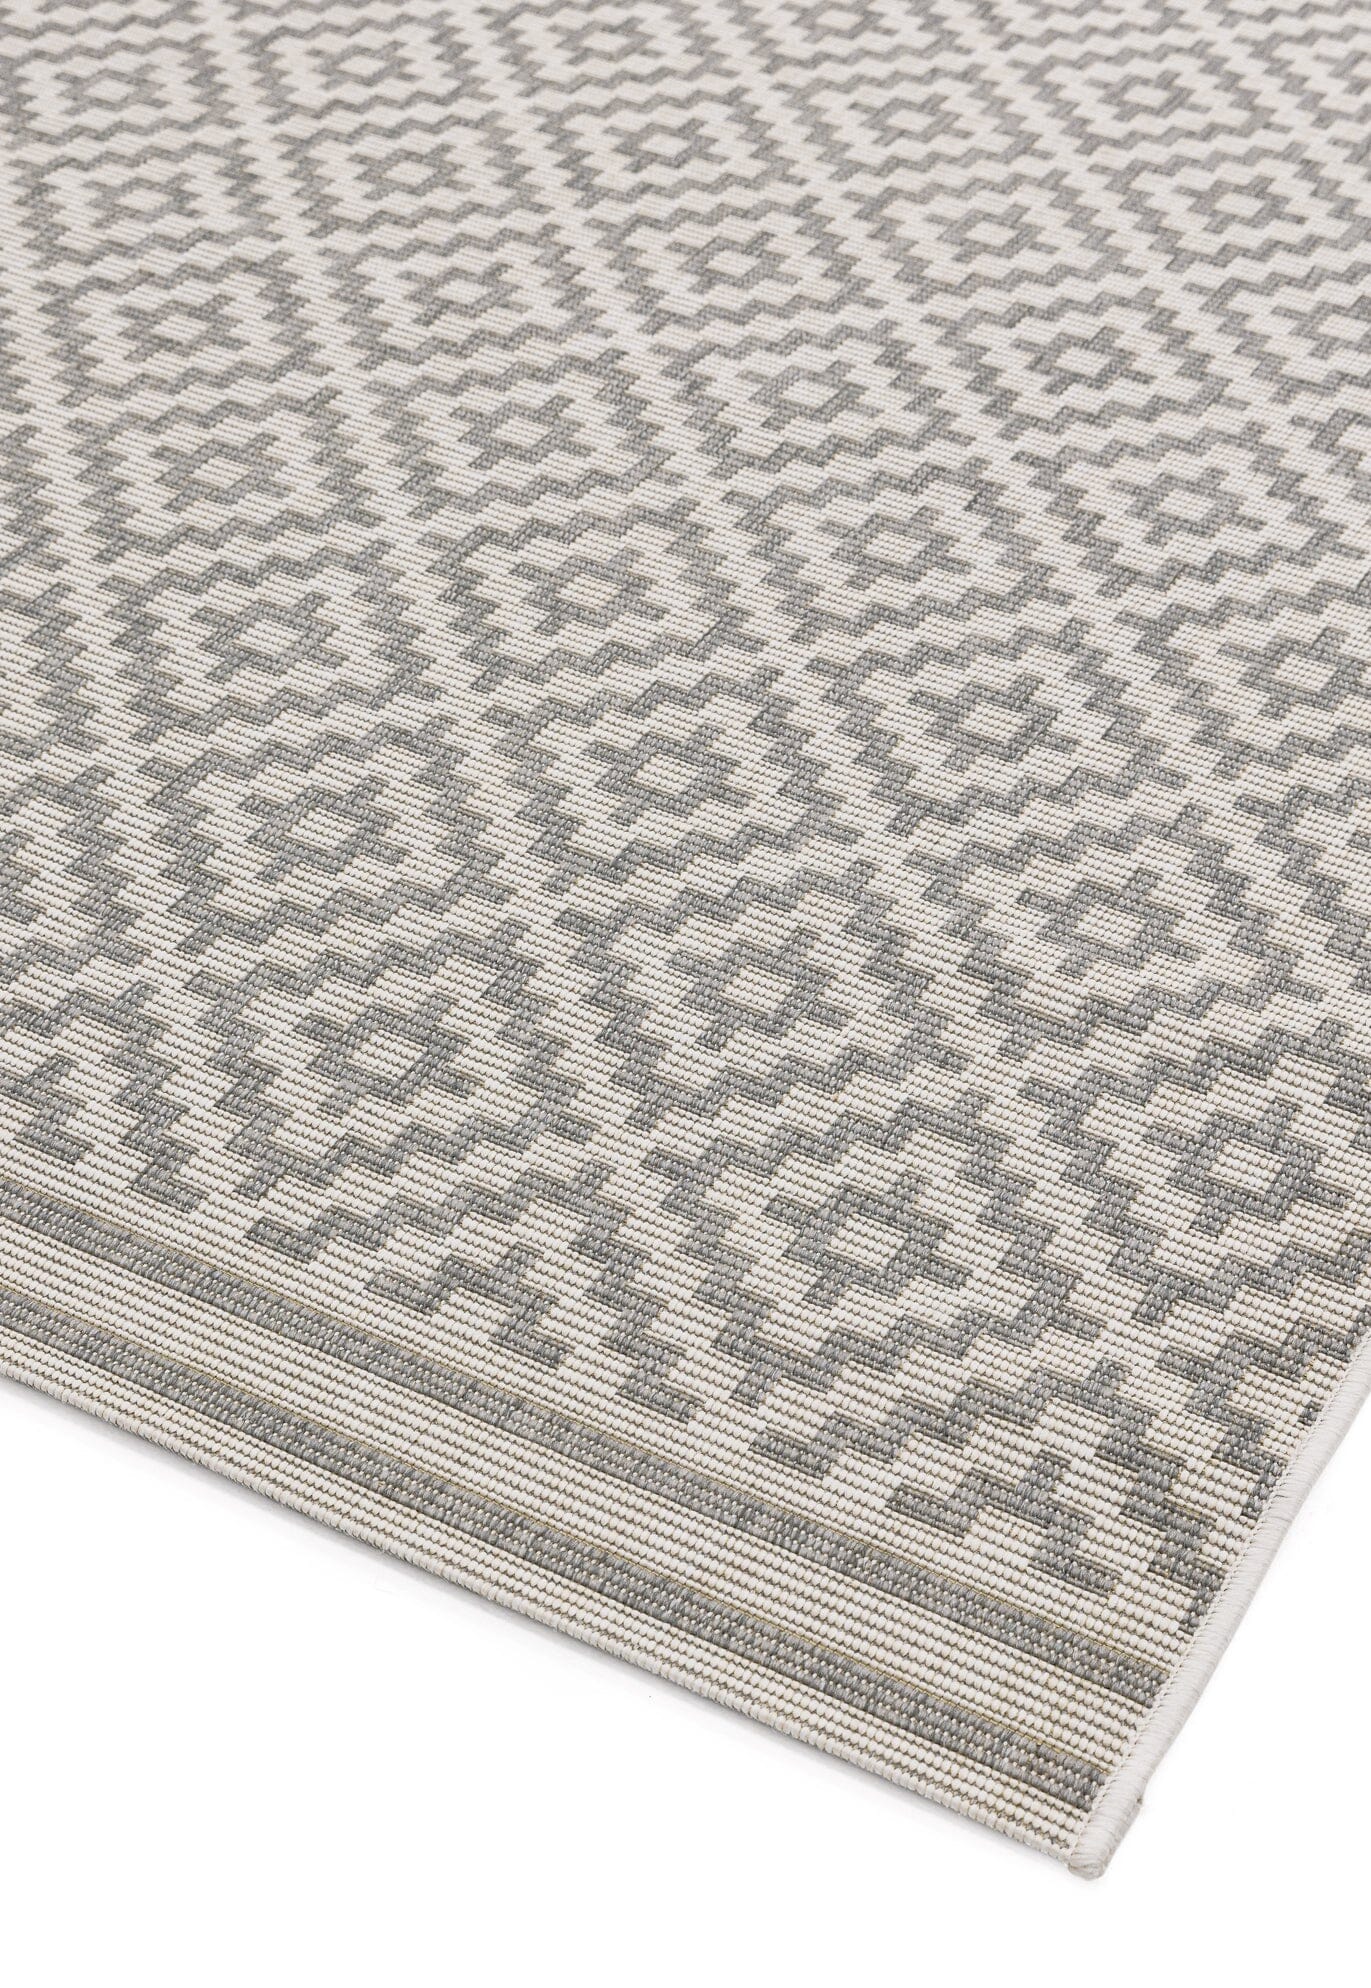 Asiatic Carpets Patio Machine Woven Rug Diamond Grey - 160 x 230cm